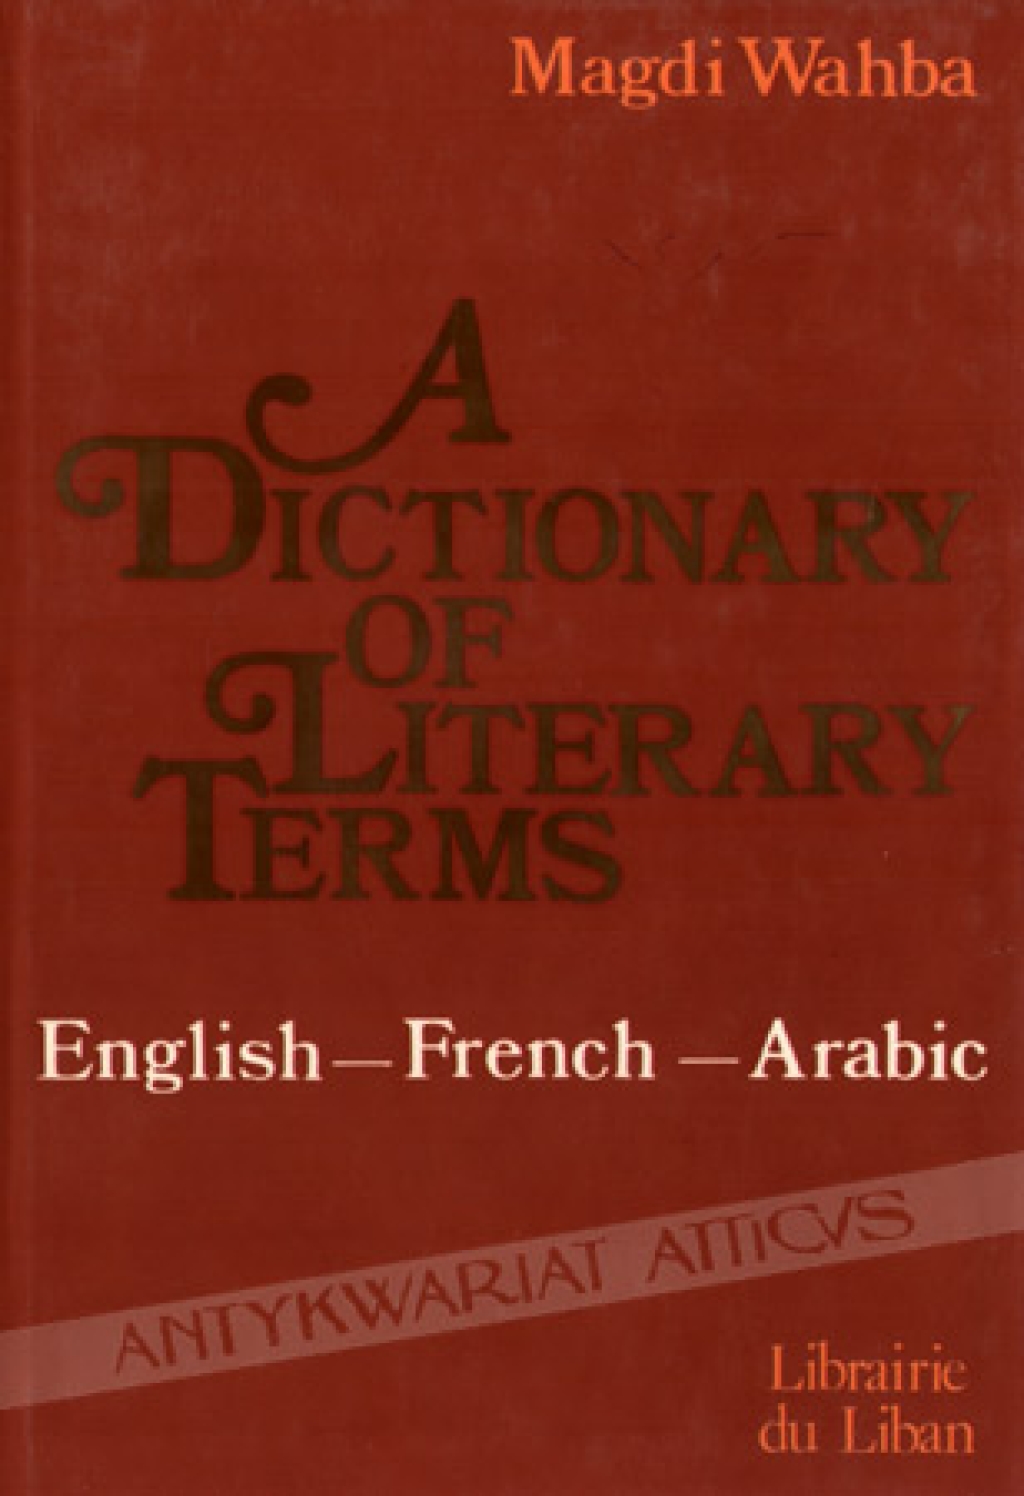 A Dictionary of Literary Terms. English-French-Arabic عنوان موجود على صفحة عنوان أخرى
معجم مصطلحات الأدب انكليزي-فرنسي-عرب